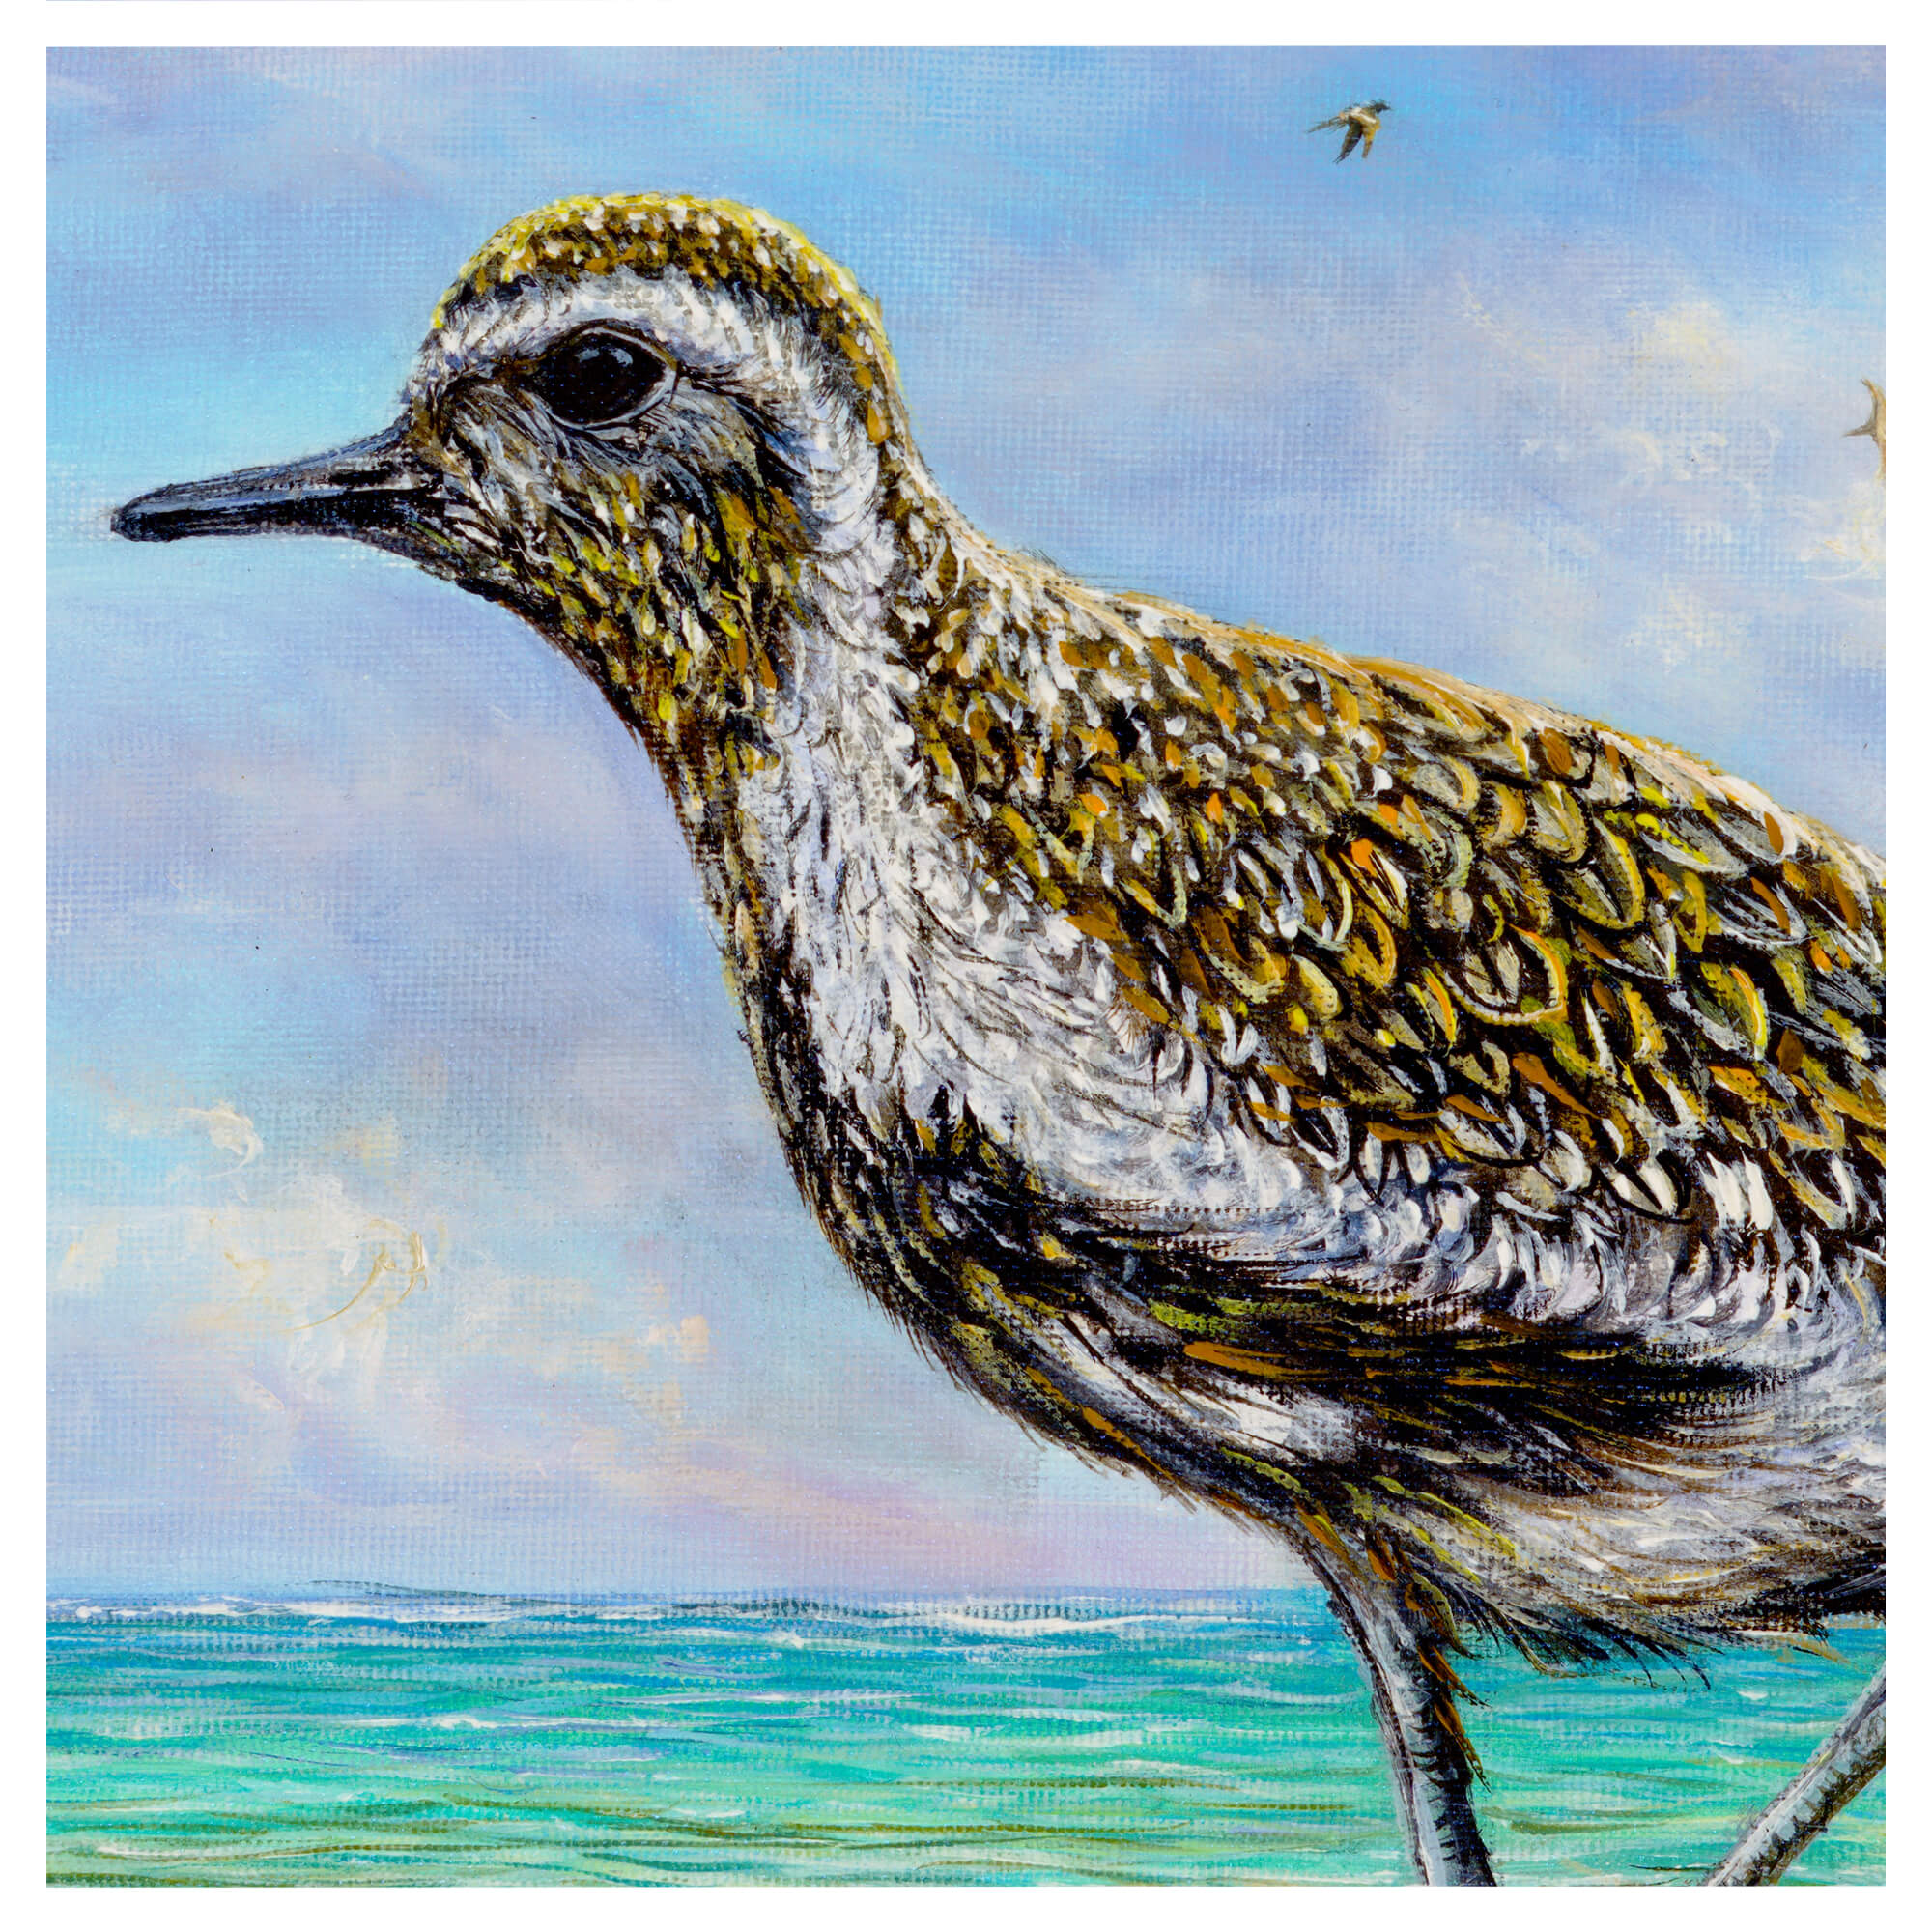 An illustration of a bird by hawaii artist  Esperance Rakotonirina